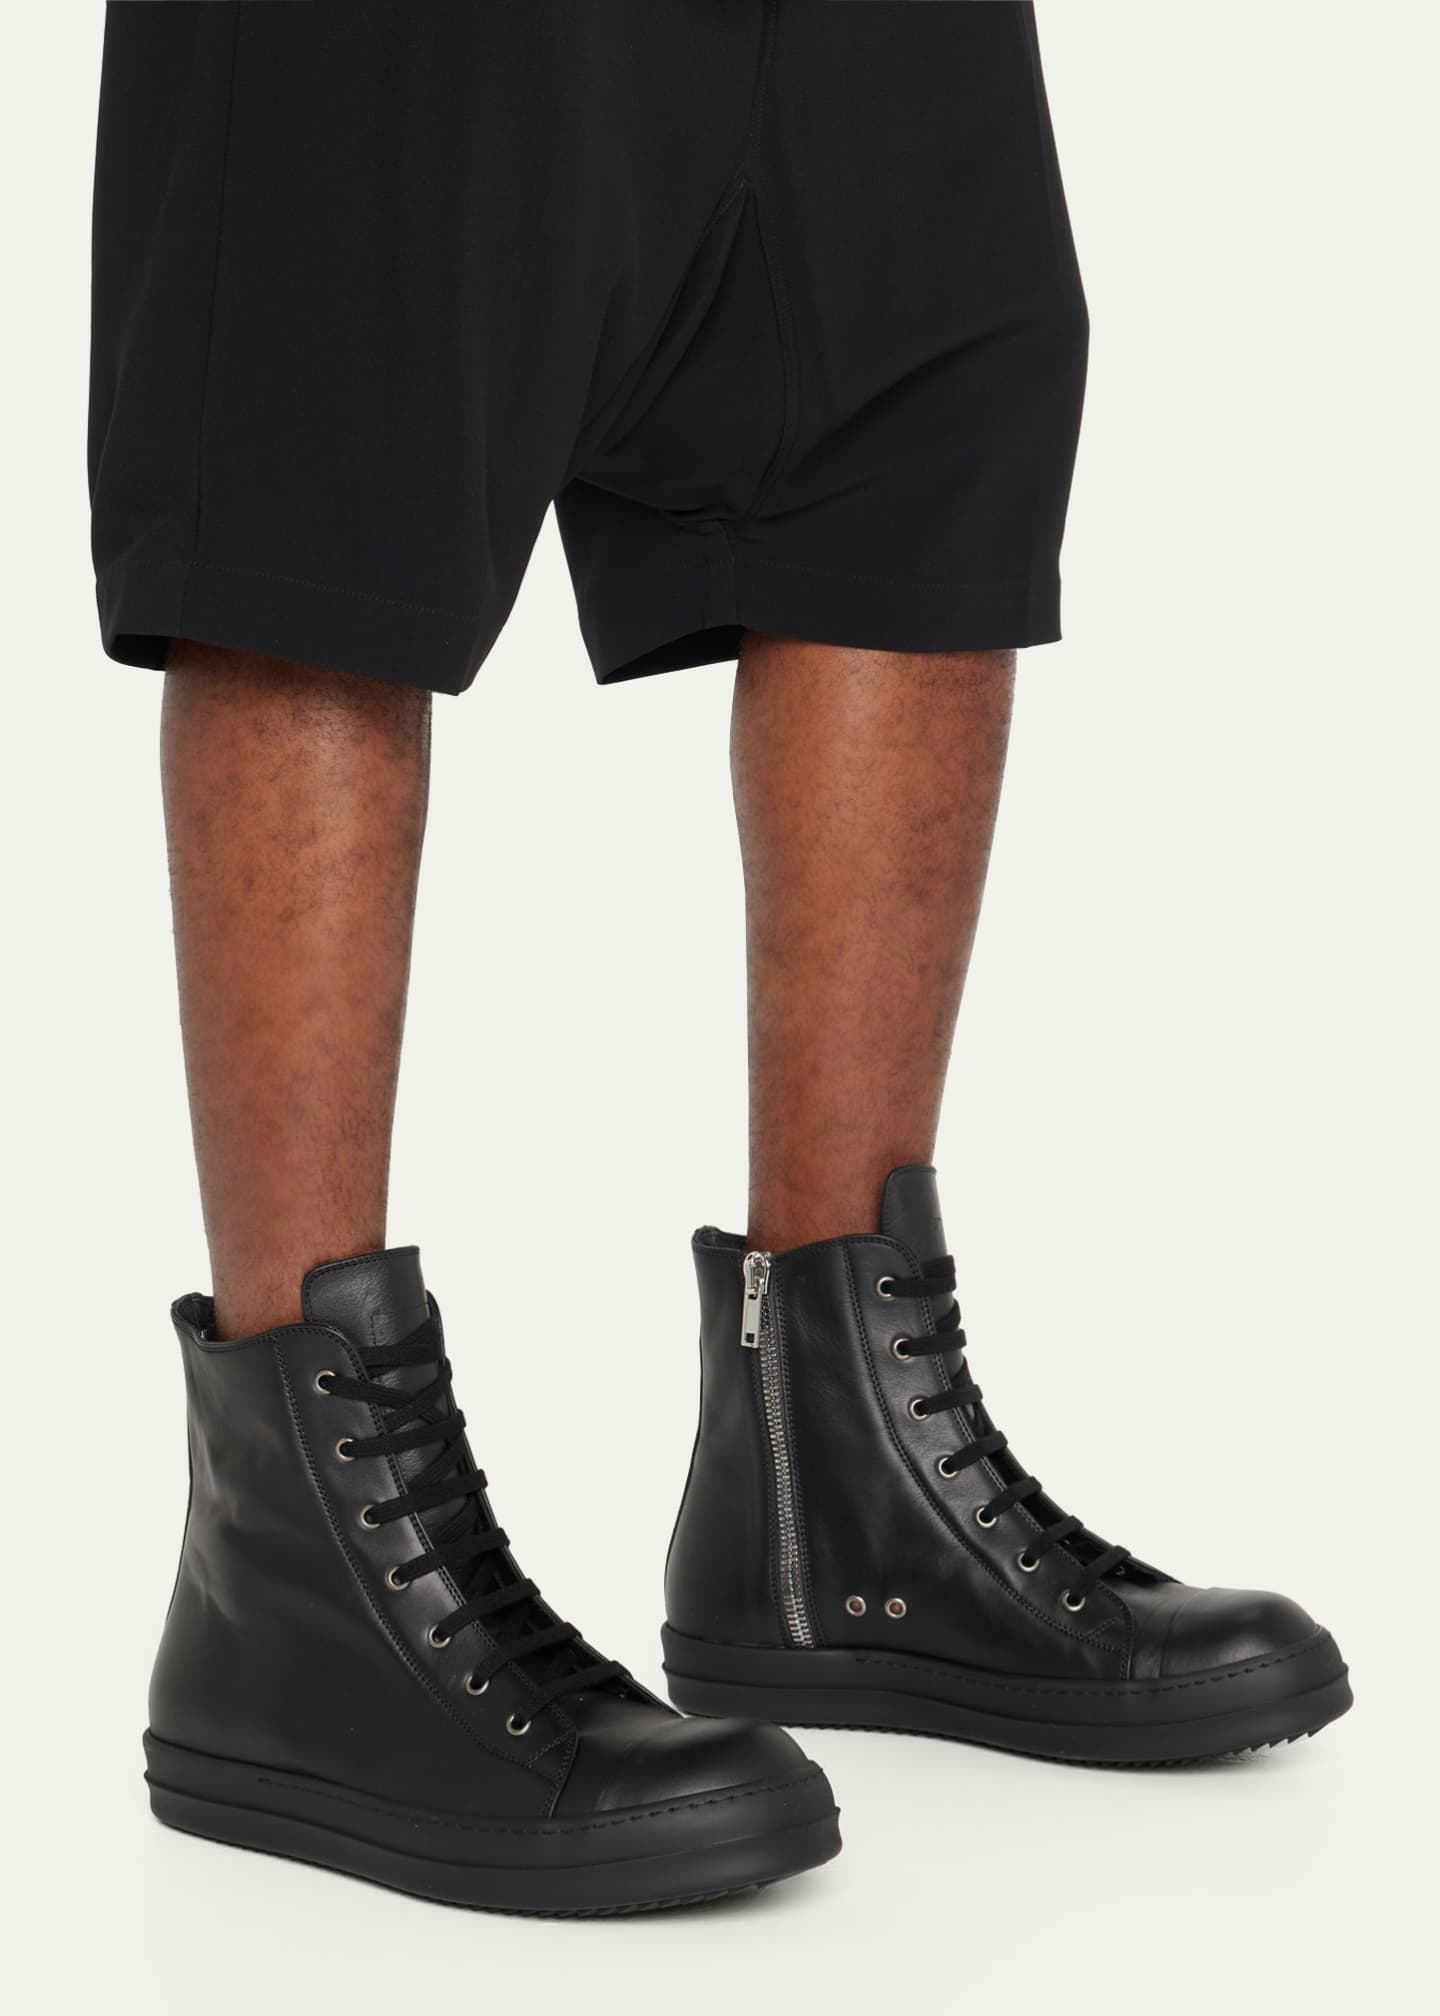 Bølle banan Outlook Rick Owens Men's Leather Zip High-Top Sneakers - Bergdorf Goodman